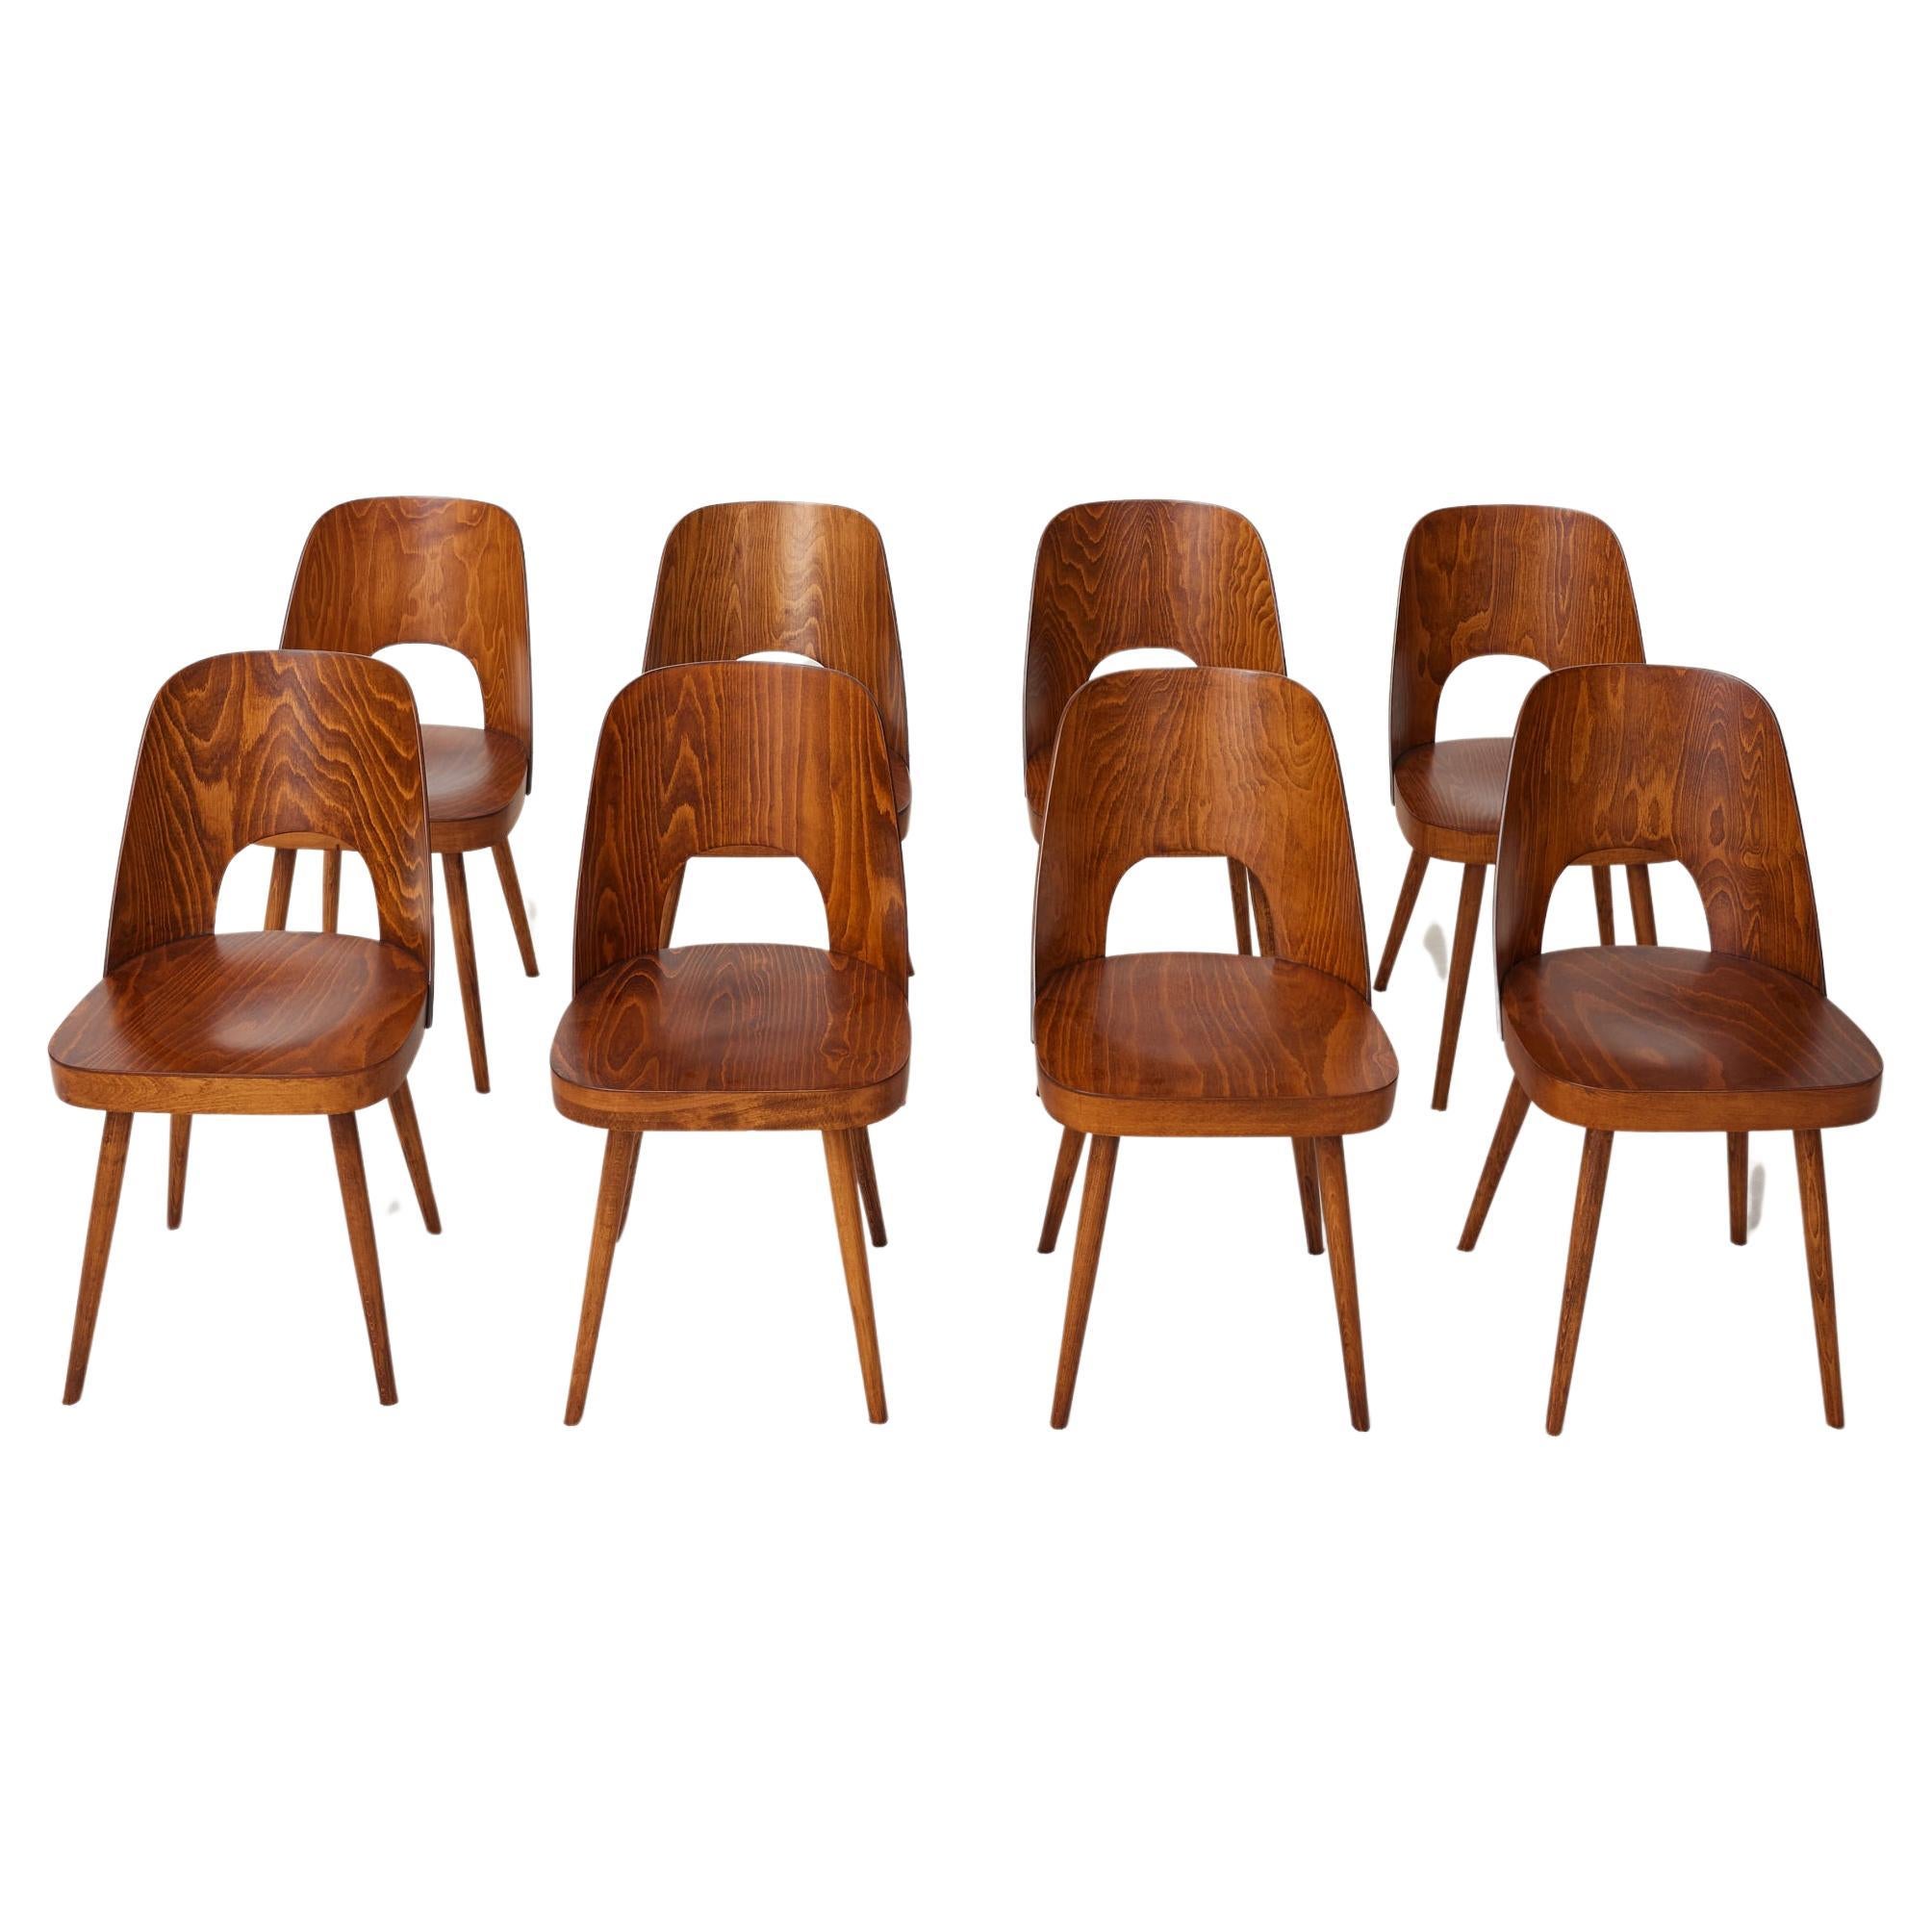 OSWALD HAERDTL Set of 8 "No 515" dining chairs